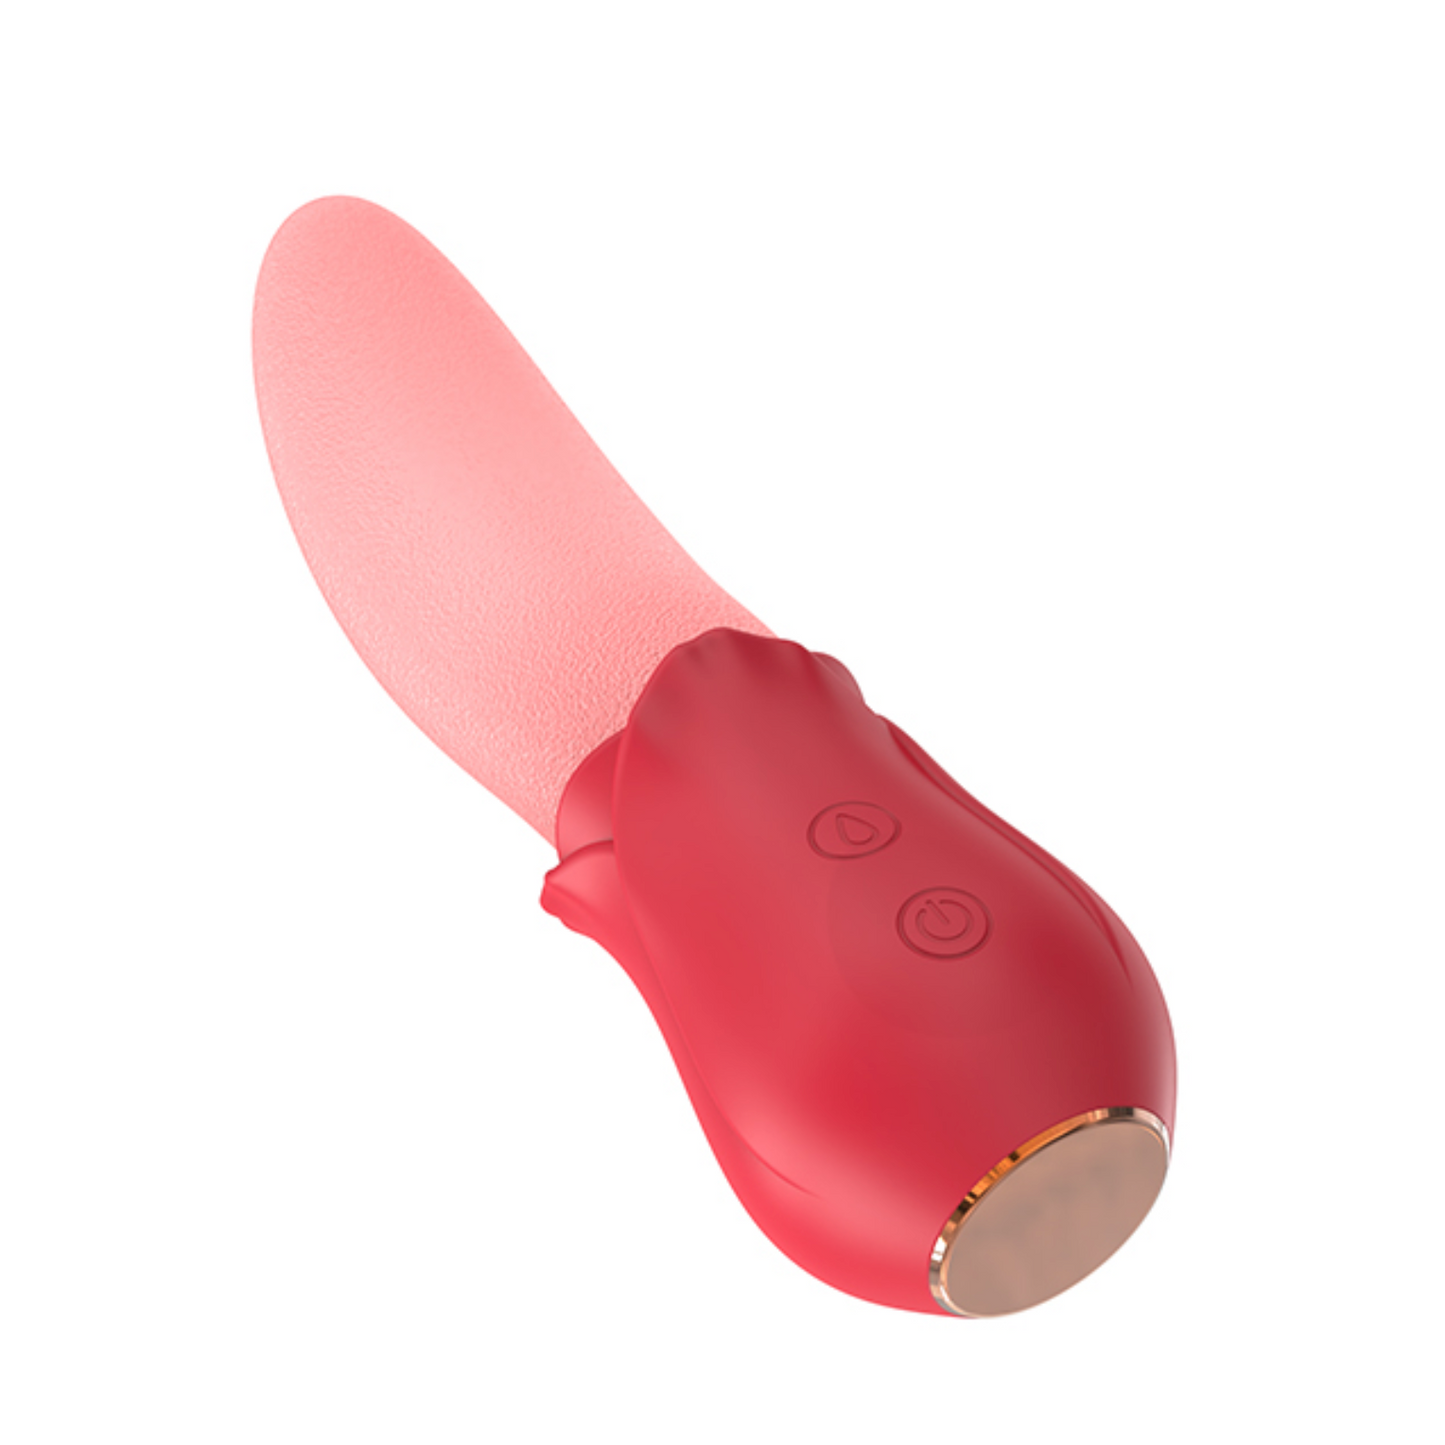 Realistic Licking Tongue Rose Vibrators for Women Shop kitchen home